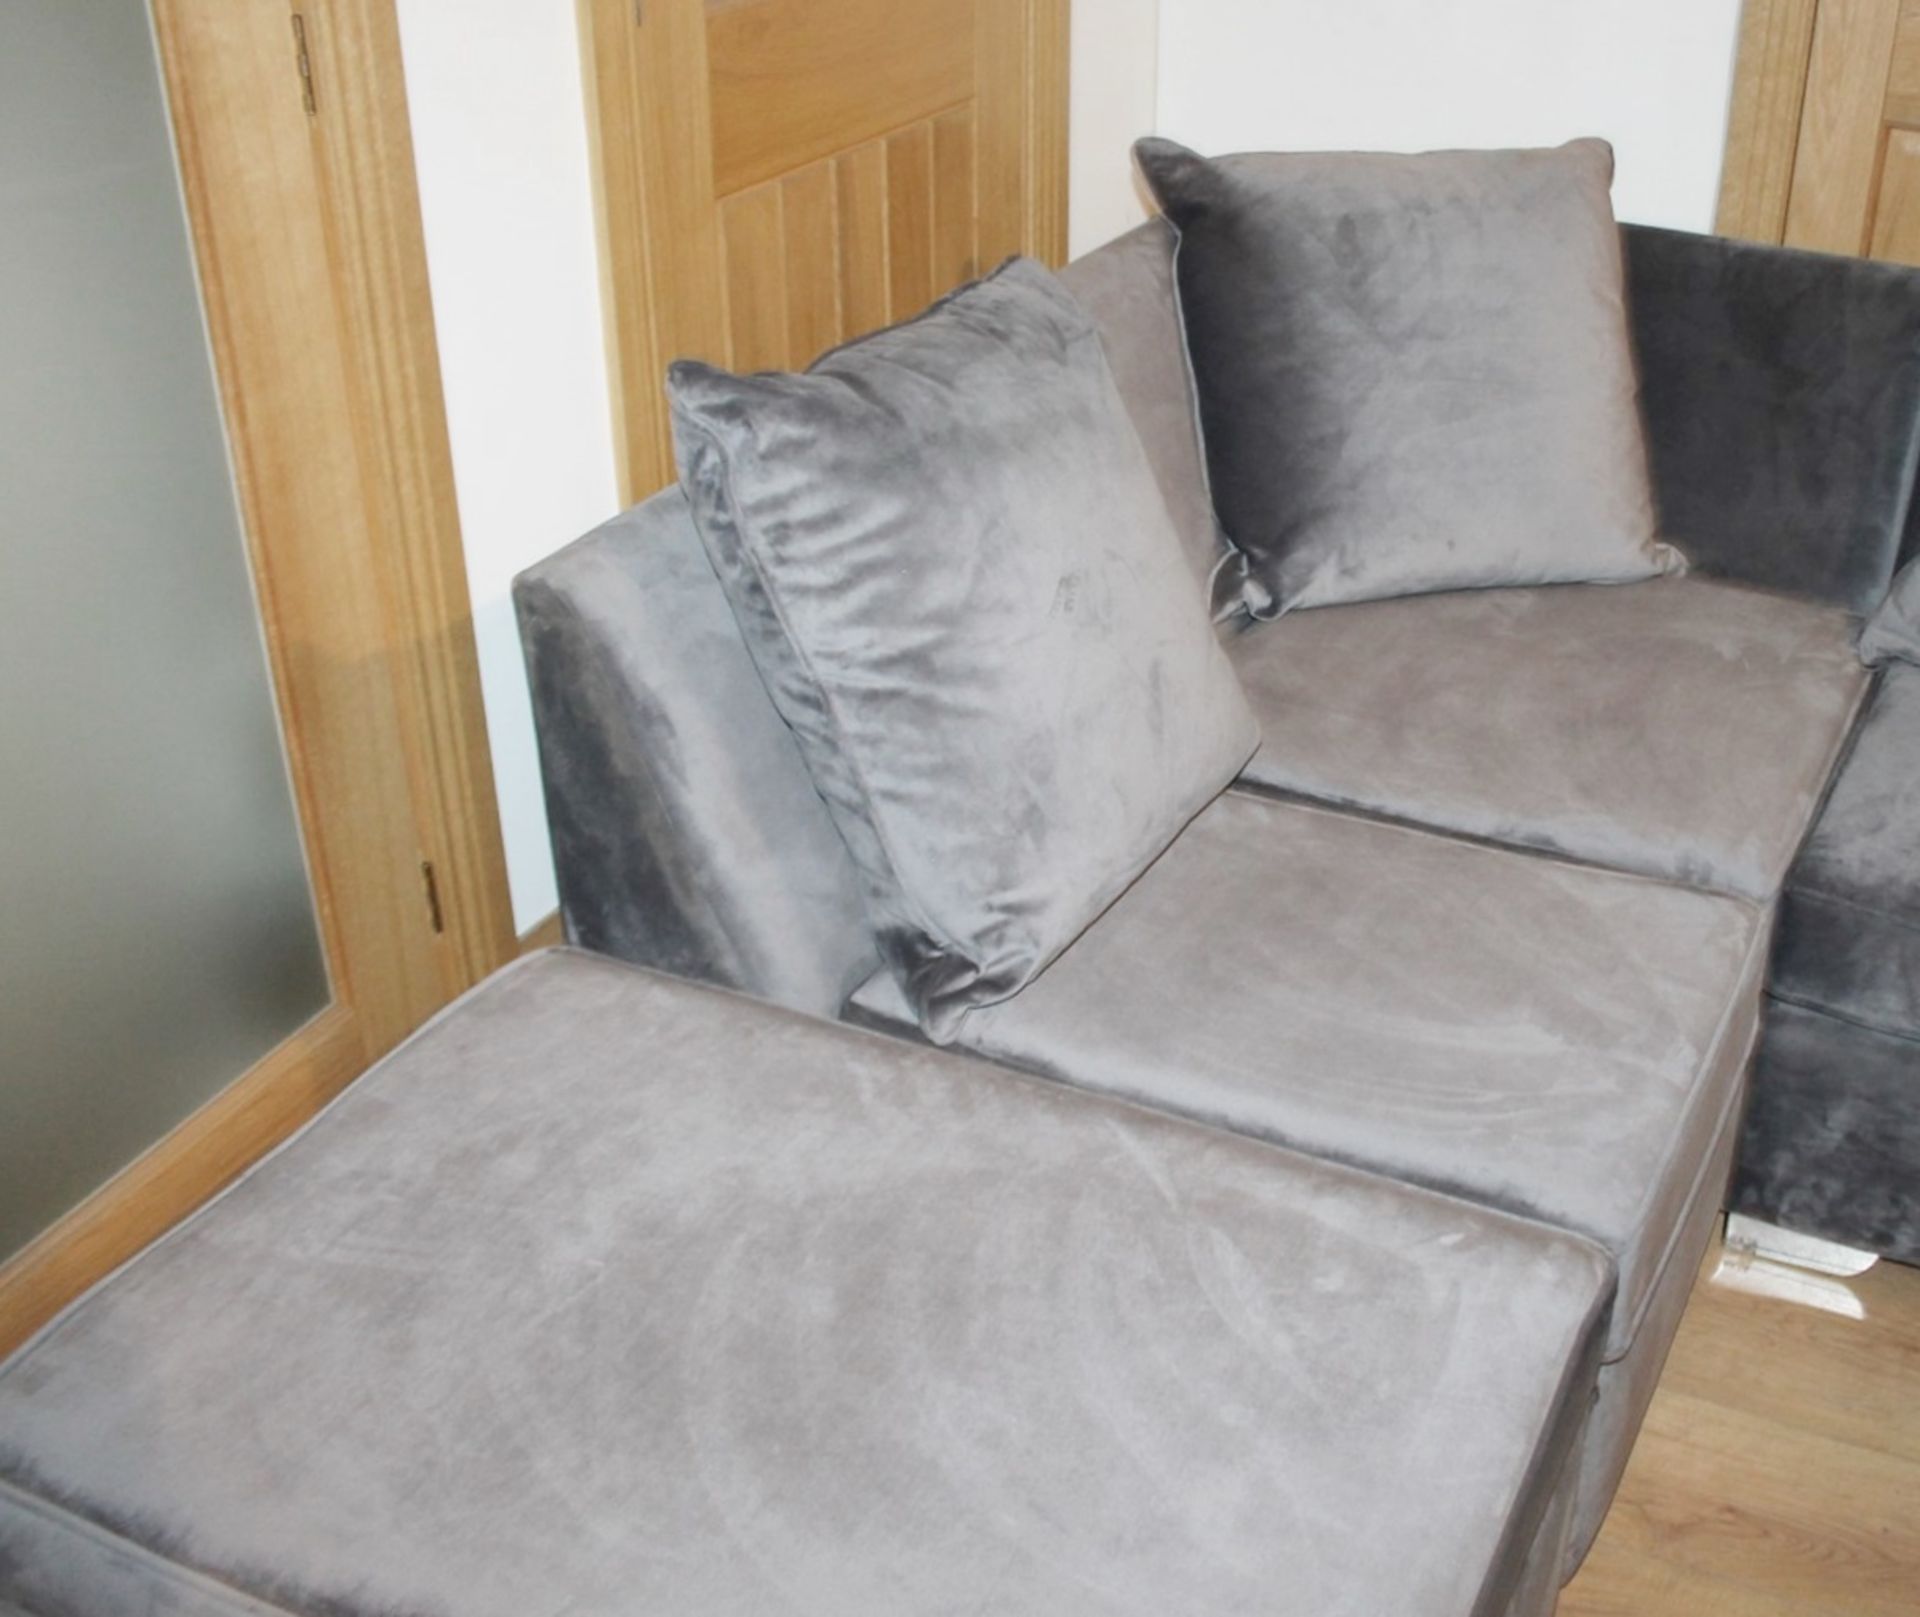 1 x Velvet Upholstered 2-Metre Corner Sofa In A Shimmering Grey Tone - Ex-Showroom Example - Ref: - Image 6 of 11